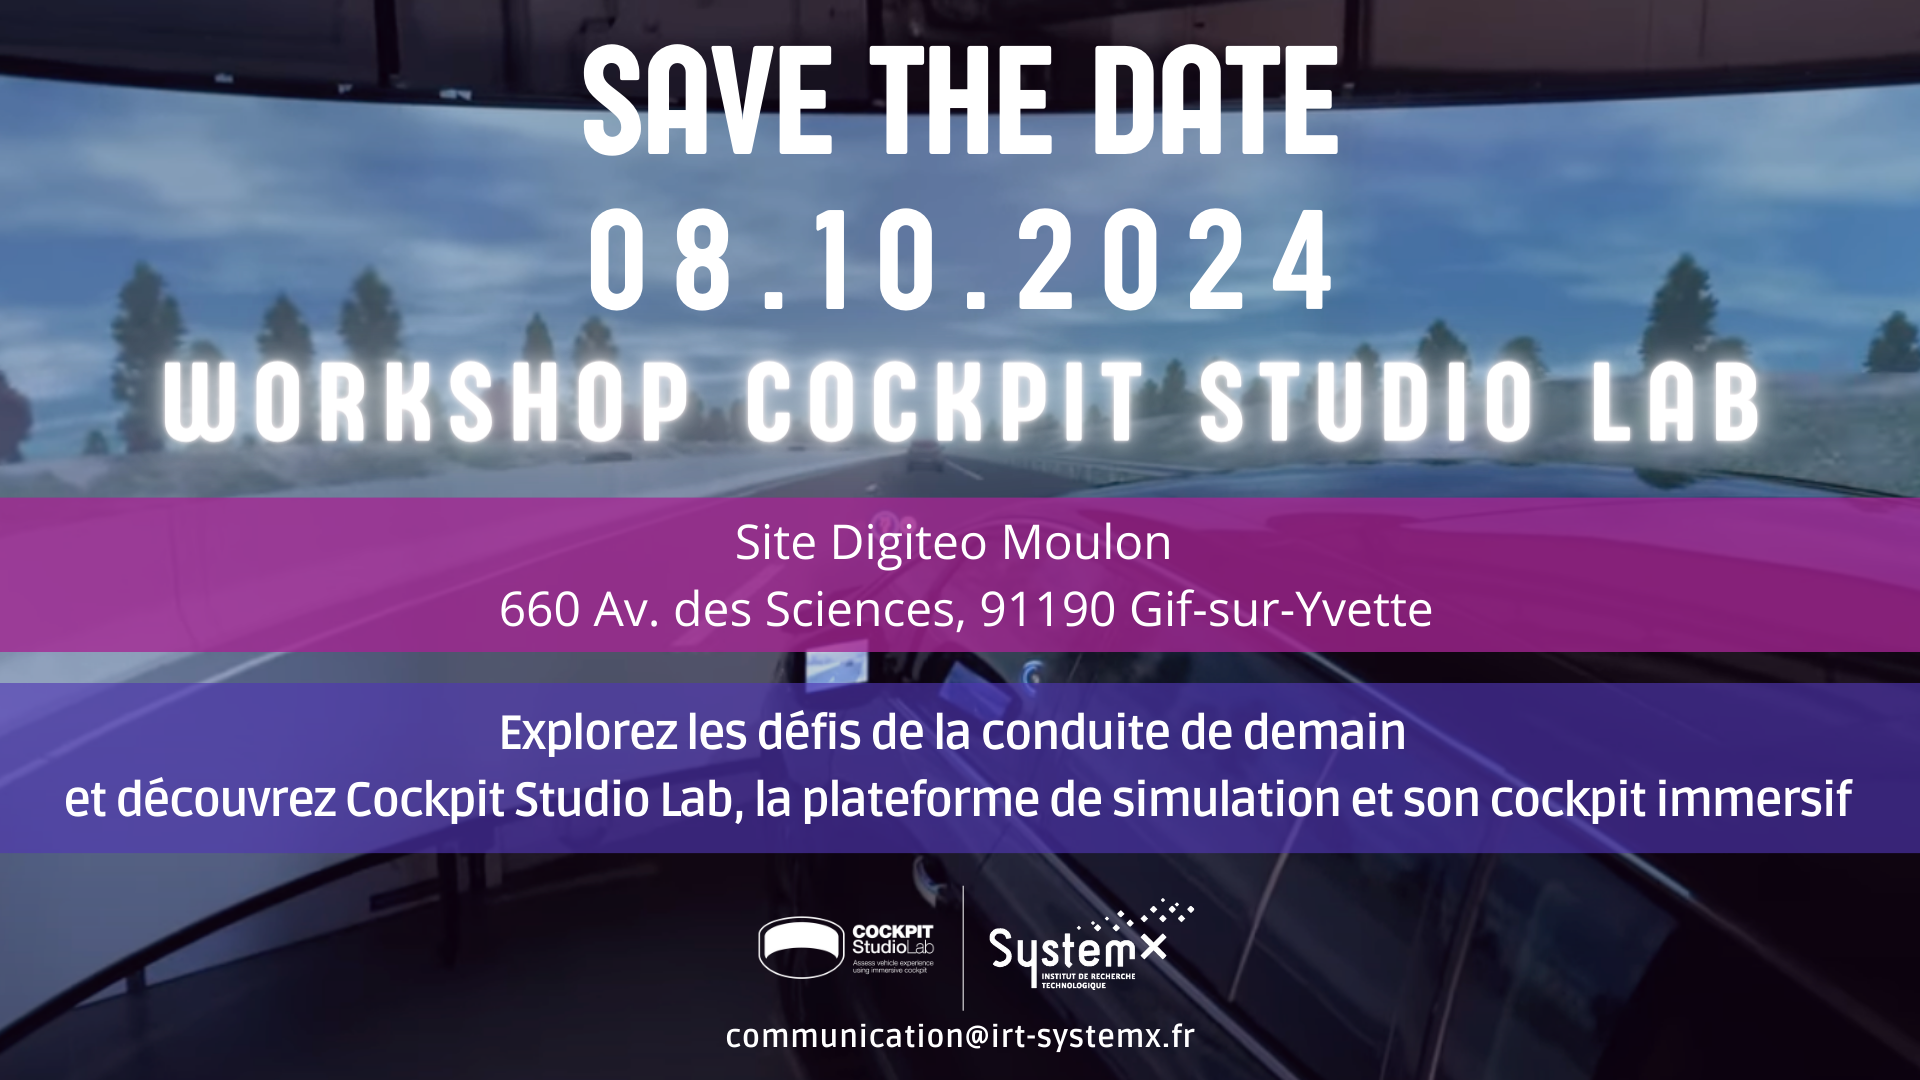 [Save the Date] Workshop Cockpit Studio Lab